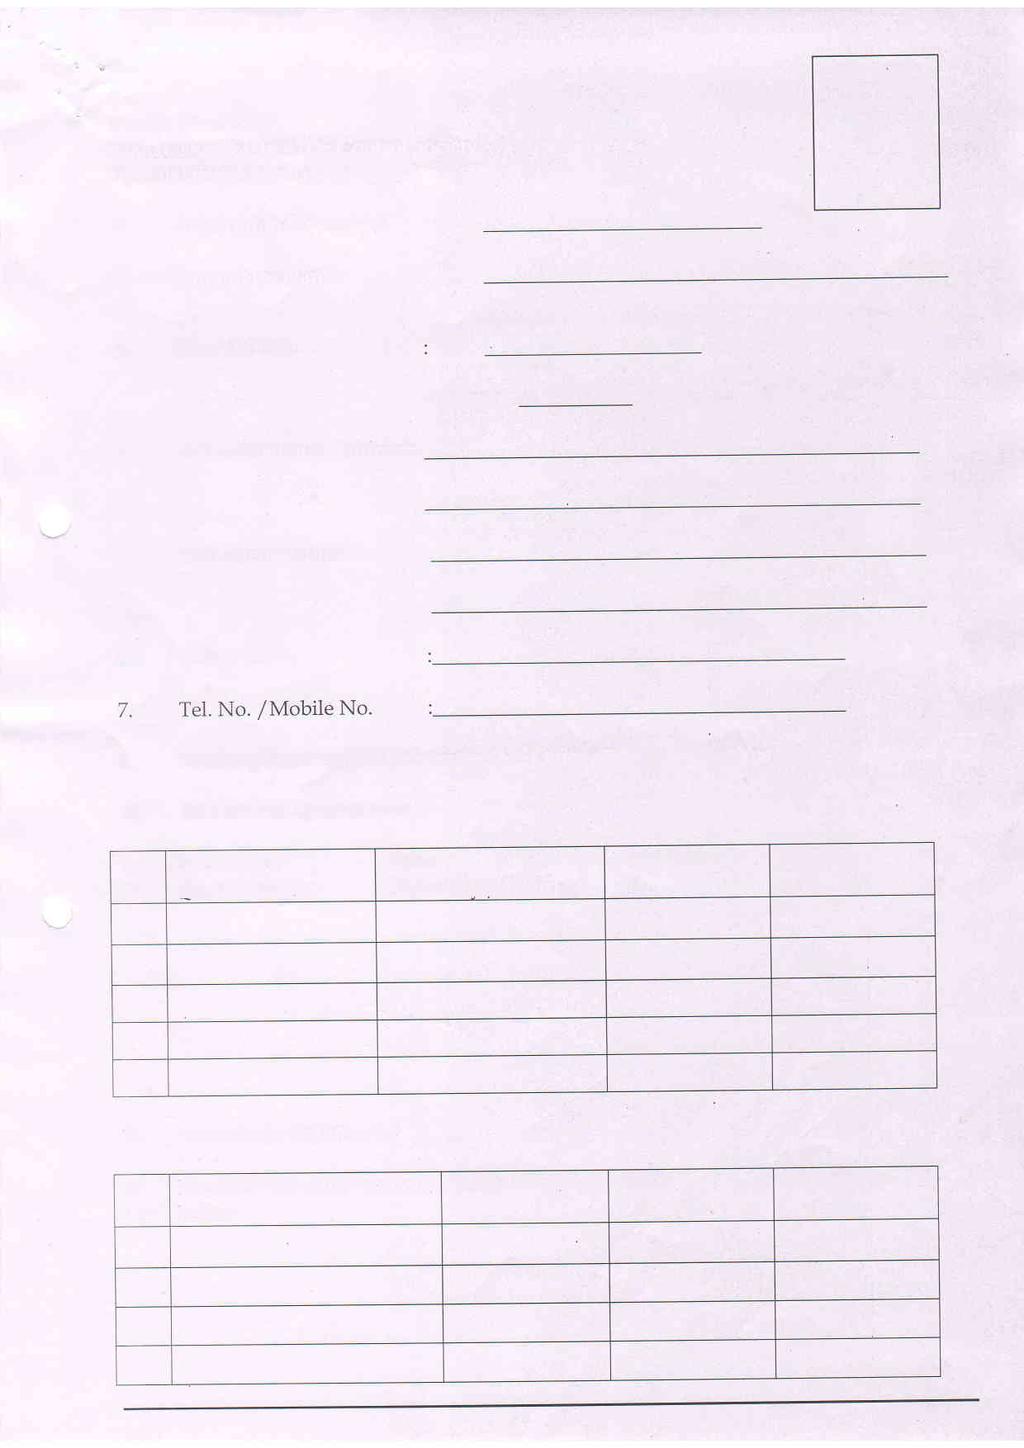 Application Format To, Project Director, Maharashtra State AIDS Control Society, Wadalal (W), Mumbai 31'.